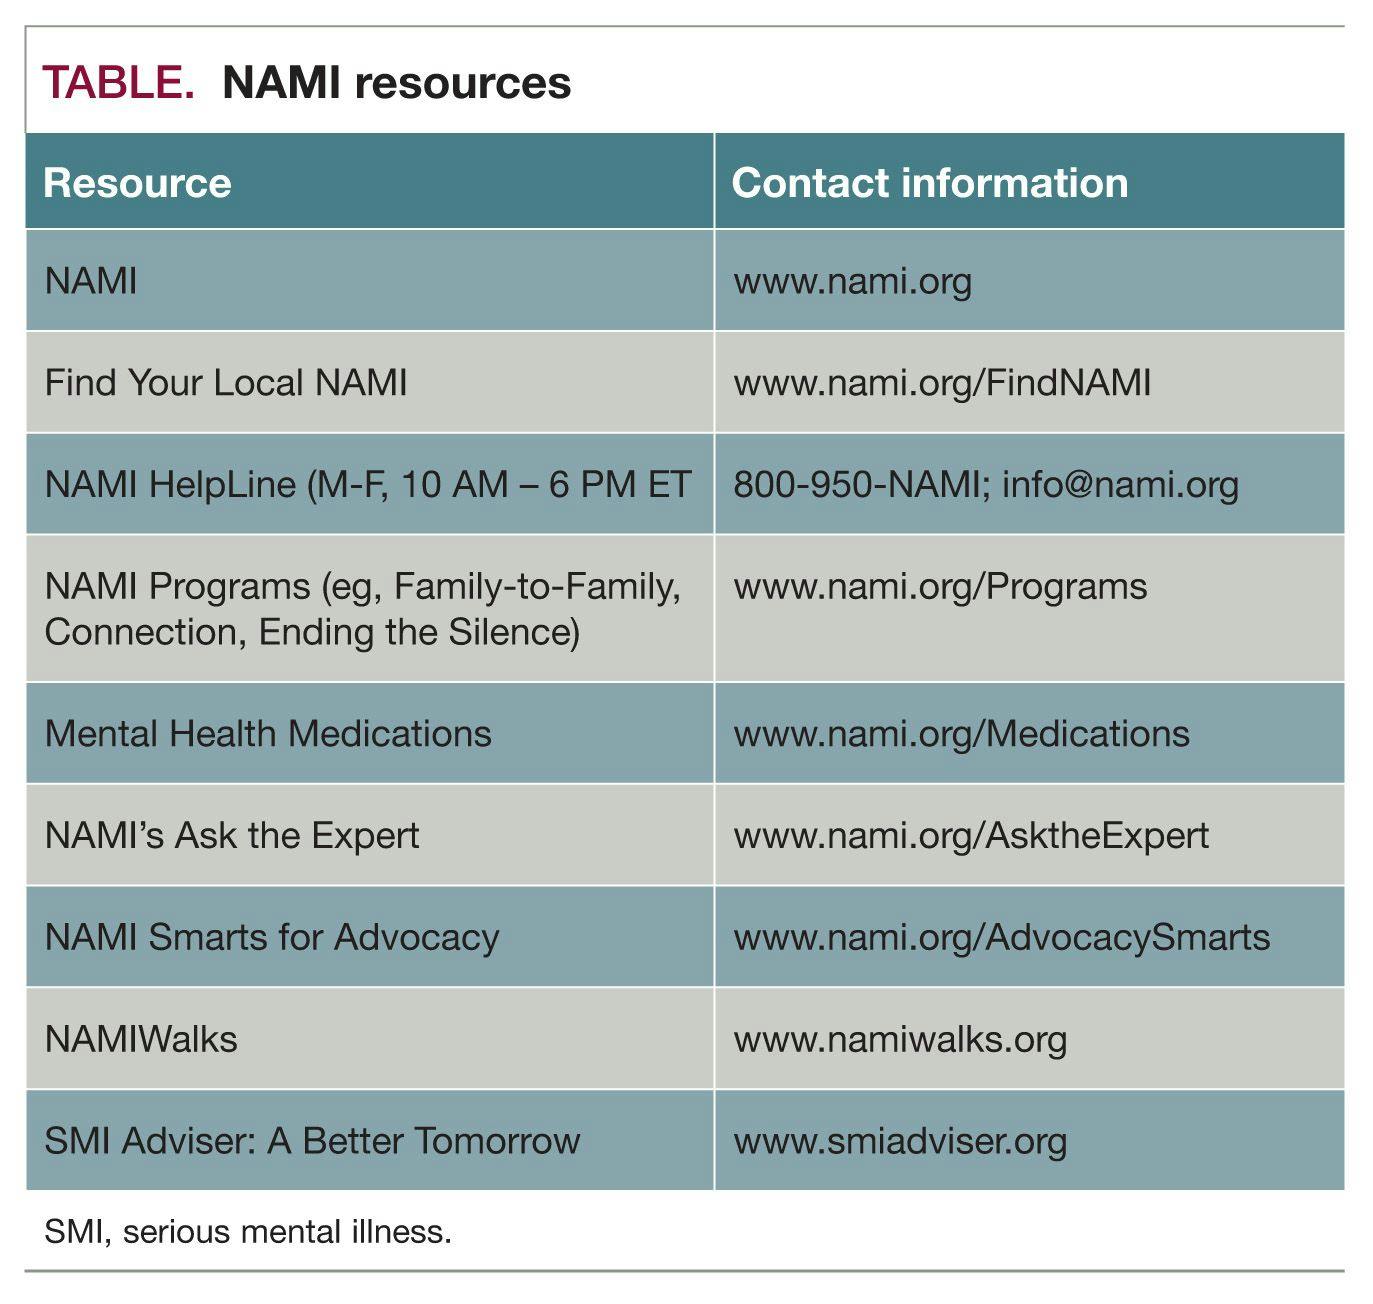 NAMI resources